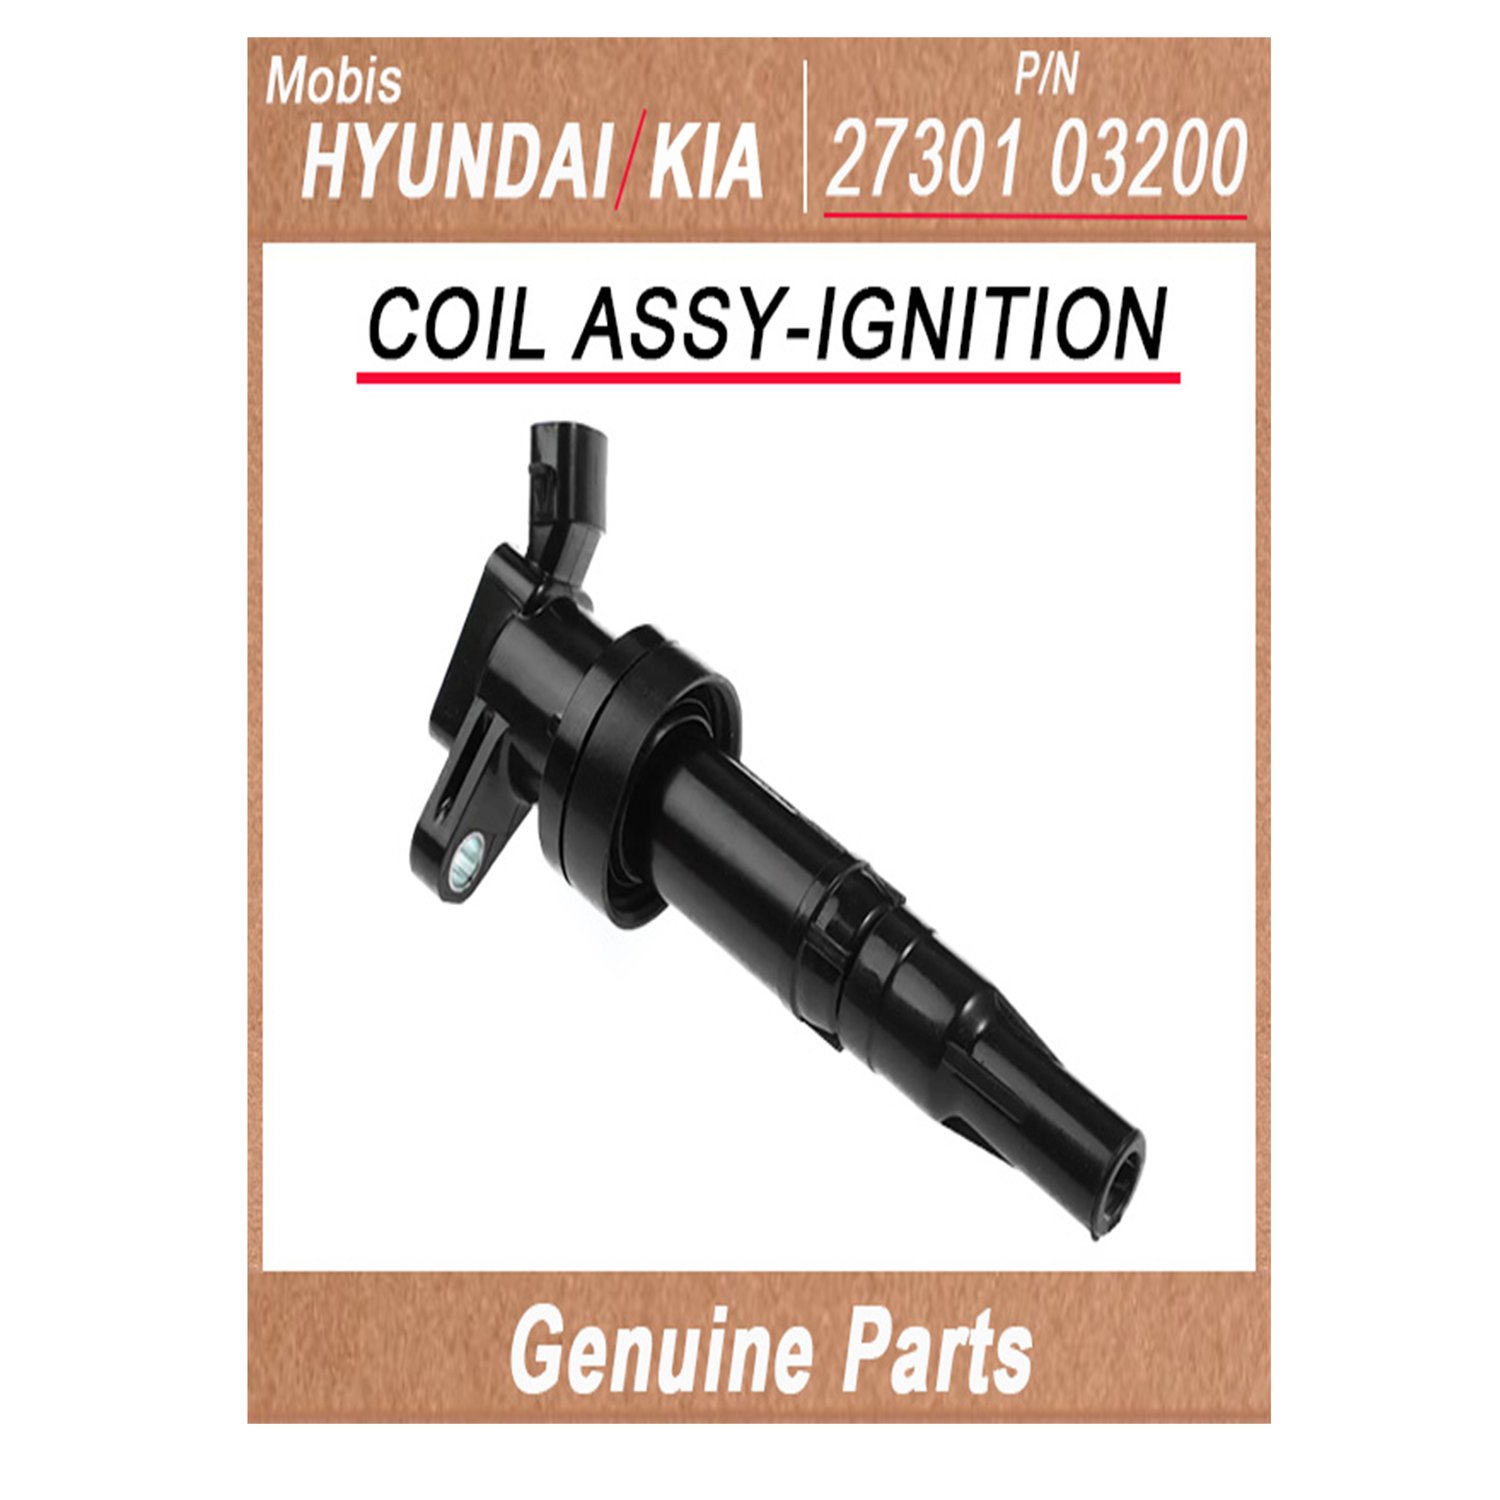 2730103200 _ COIL ASSY_IGNITION _ Genuine Korean Automotive Spare Parts _ Hyundai Kia _Mobis_